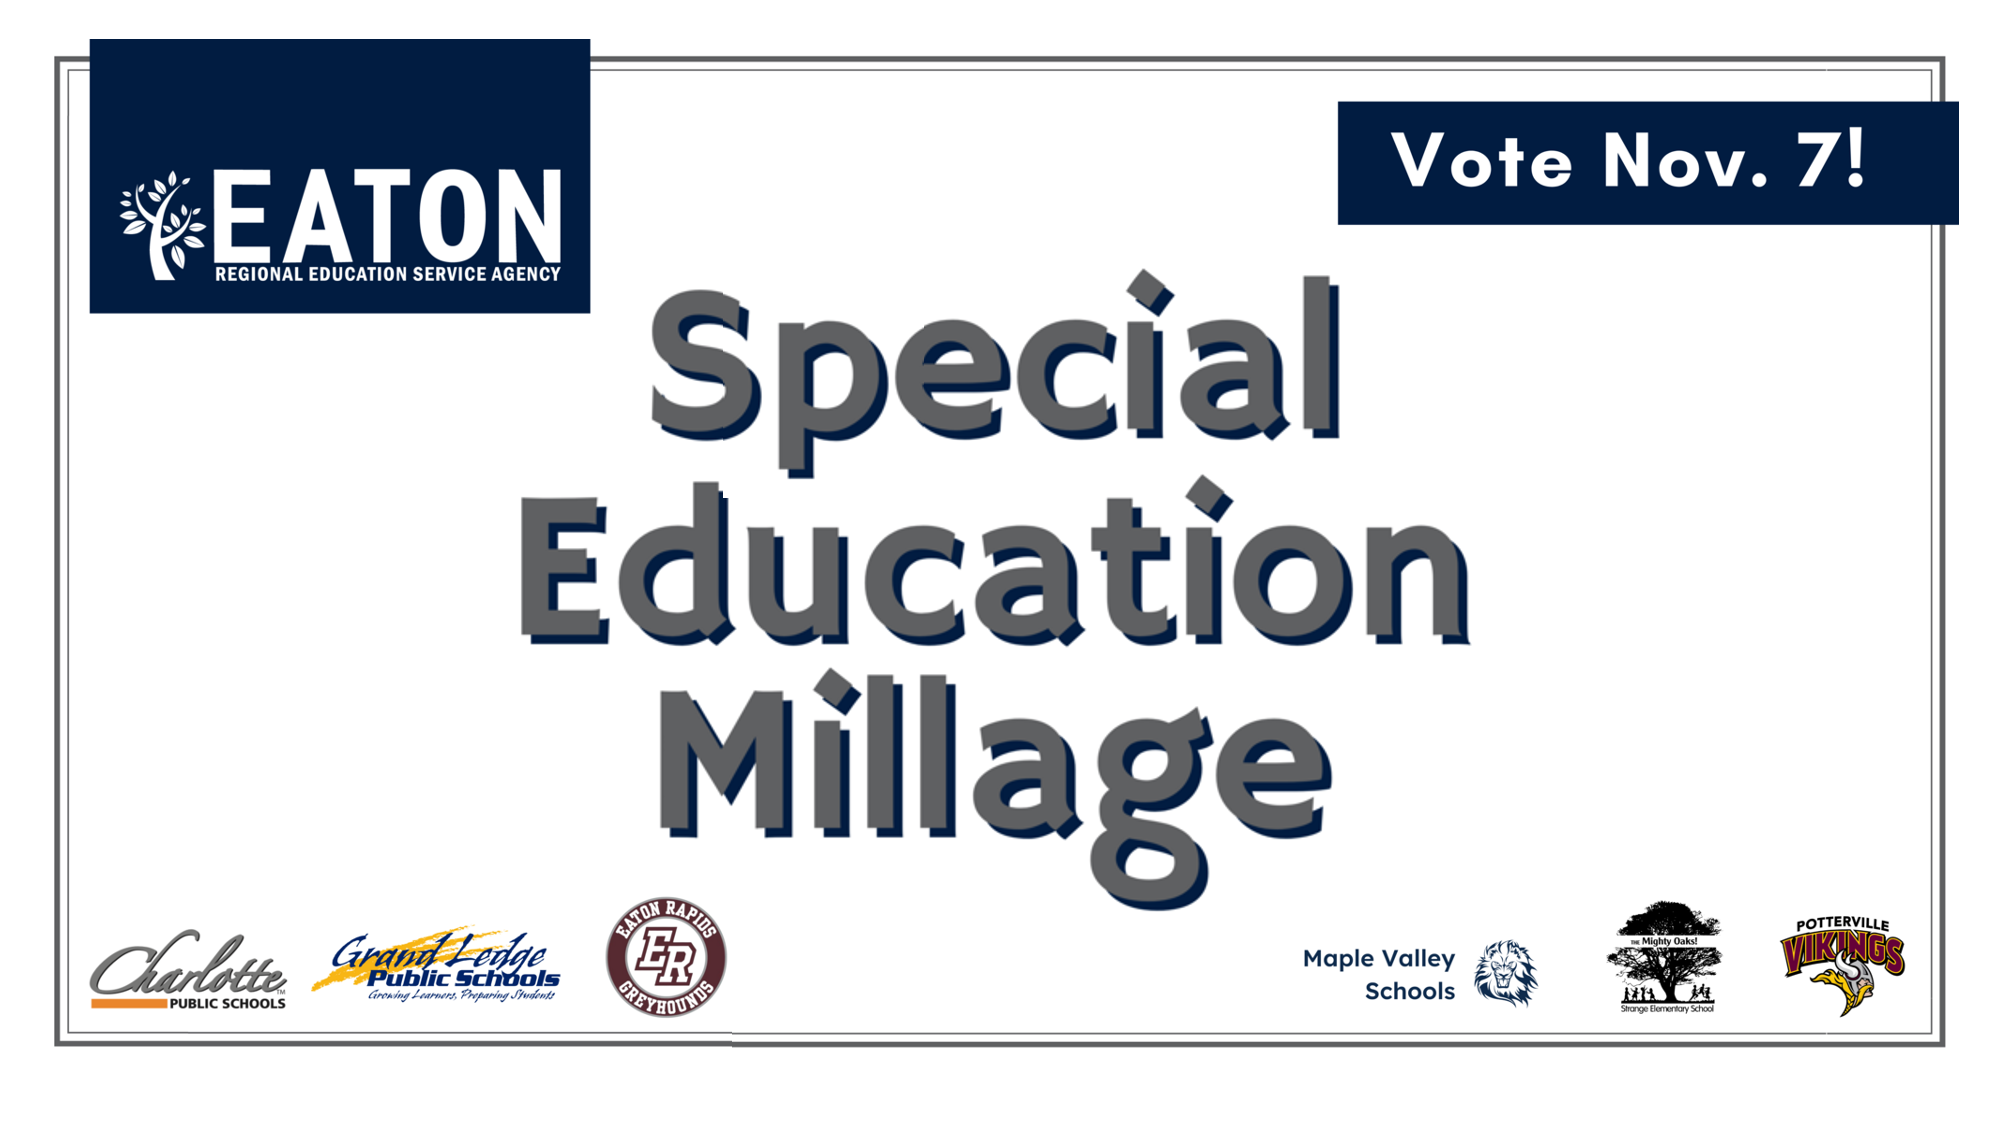 Eaton RESA's Special Education Millage